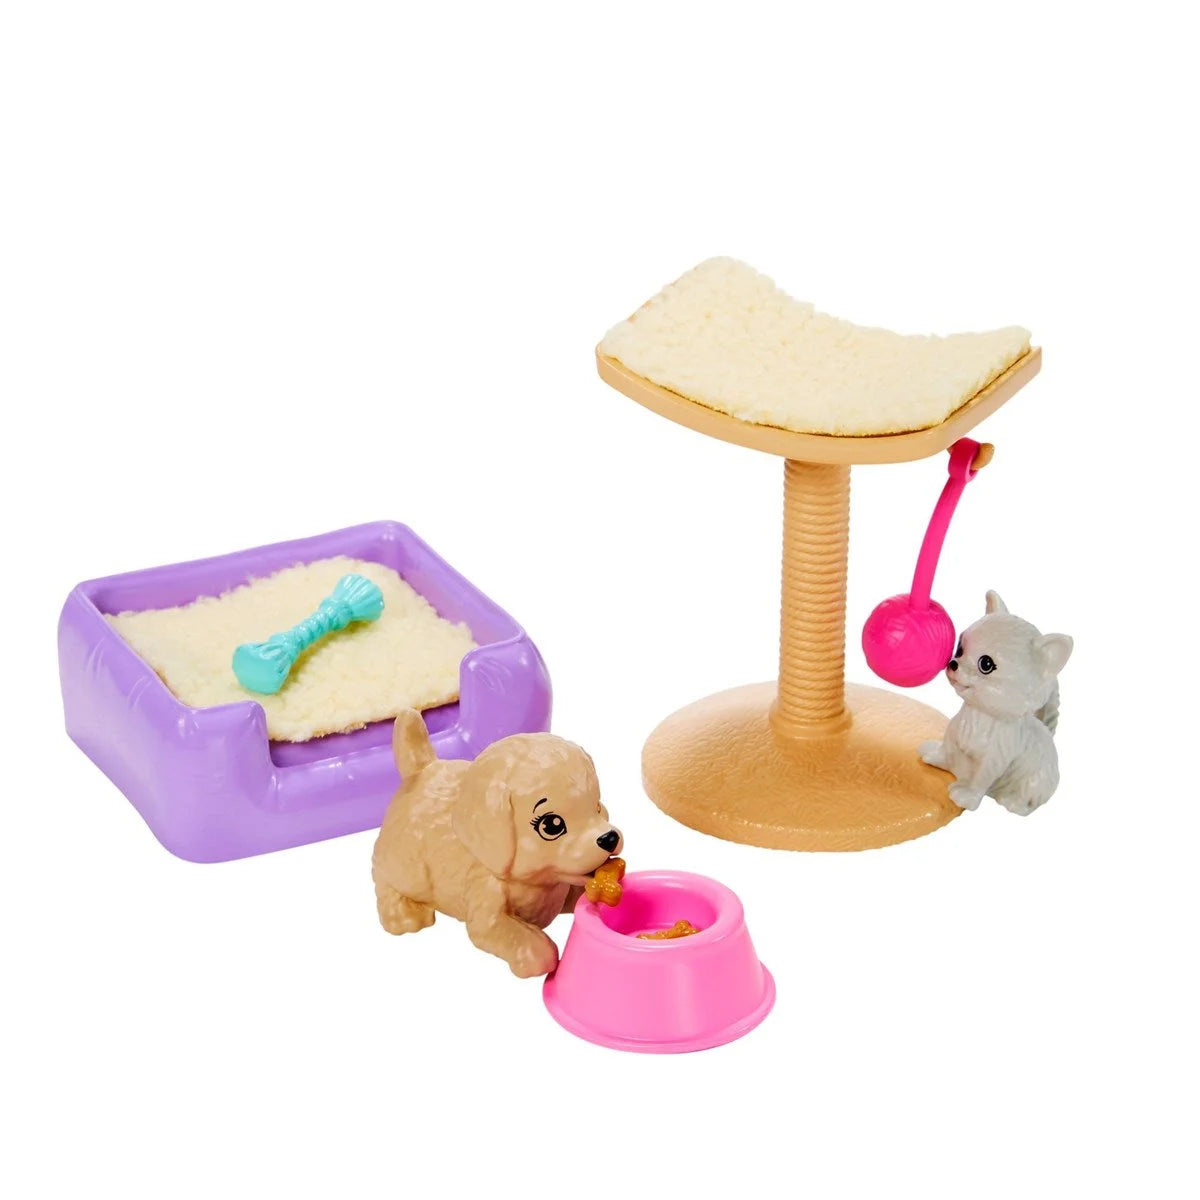 Barbie Ev Aksesuar Paketleri Oyun Seti GRG56-GRG59 | Toysall